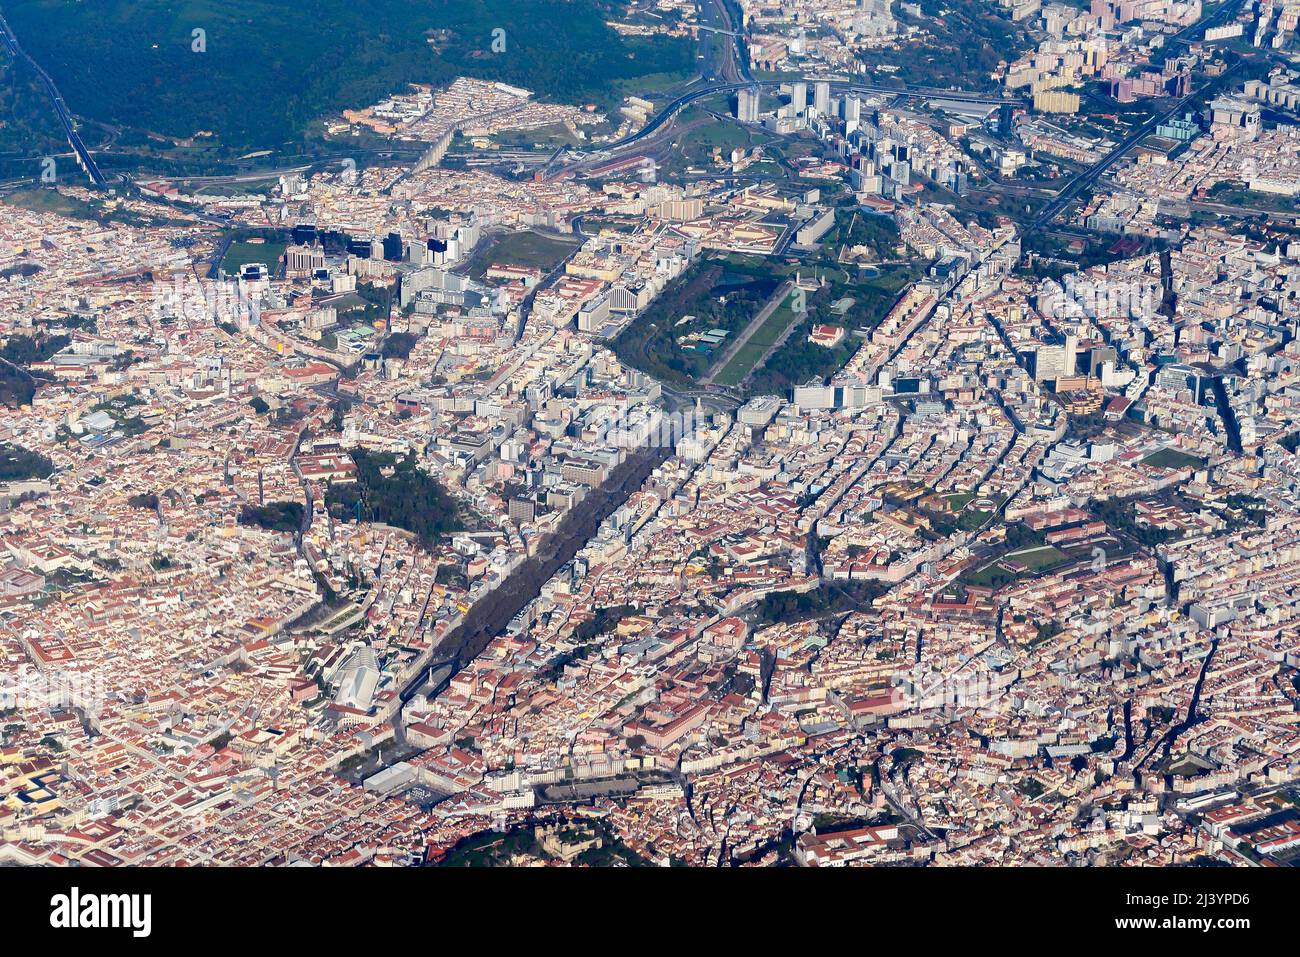 Vista aérea de Lisboa con Av. Da Liberdade Boulevard, Plaza Marques do Pombal y Parque Eduardo VII. Lisboa, capital de Portugal, vista desde arriba. Foto de stock